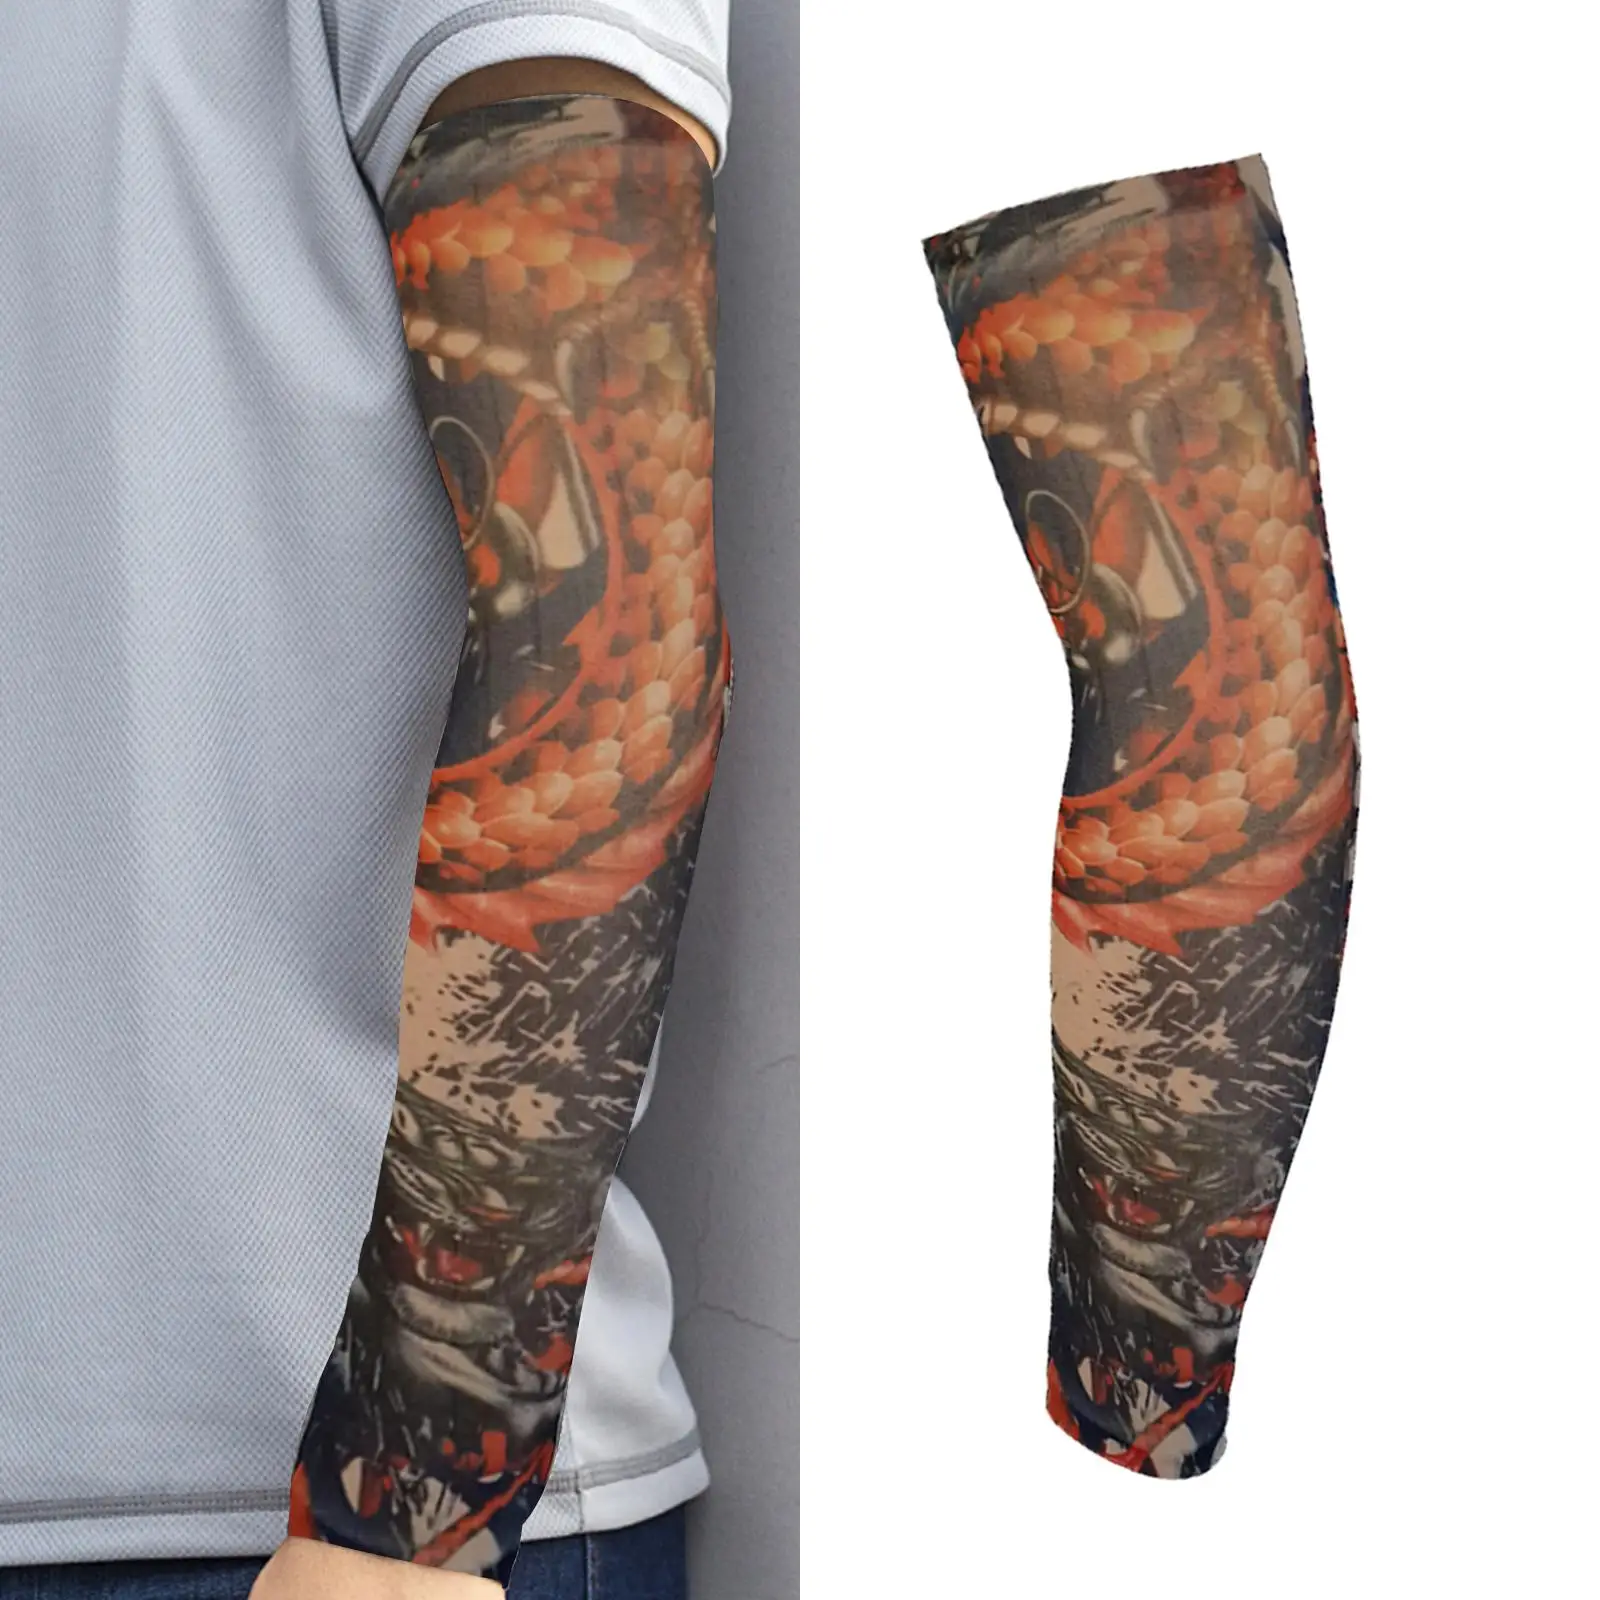 Tattoo Arm Sleeves Arm Cover Sun UV Protection Sleeve for Football Men Women